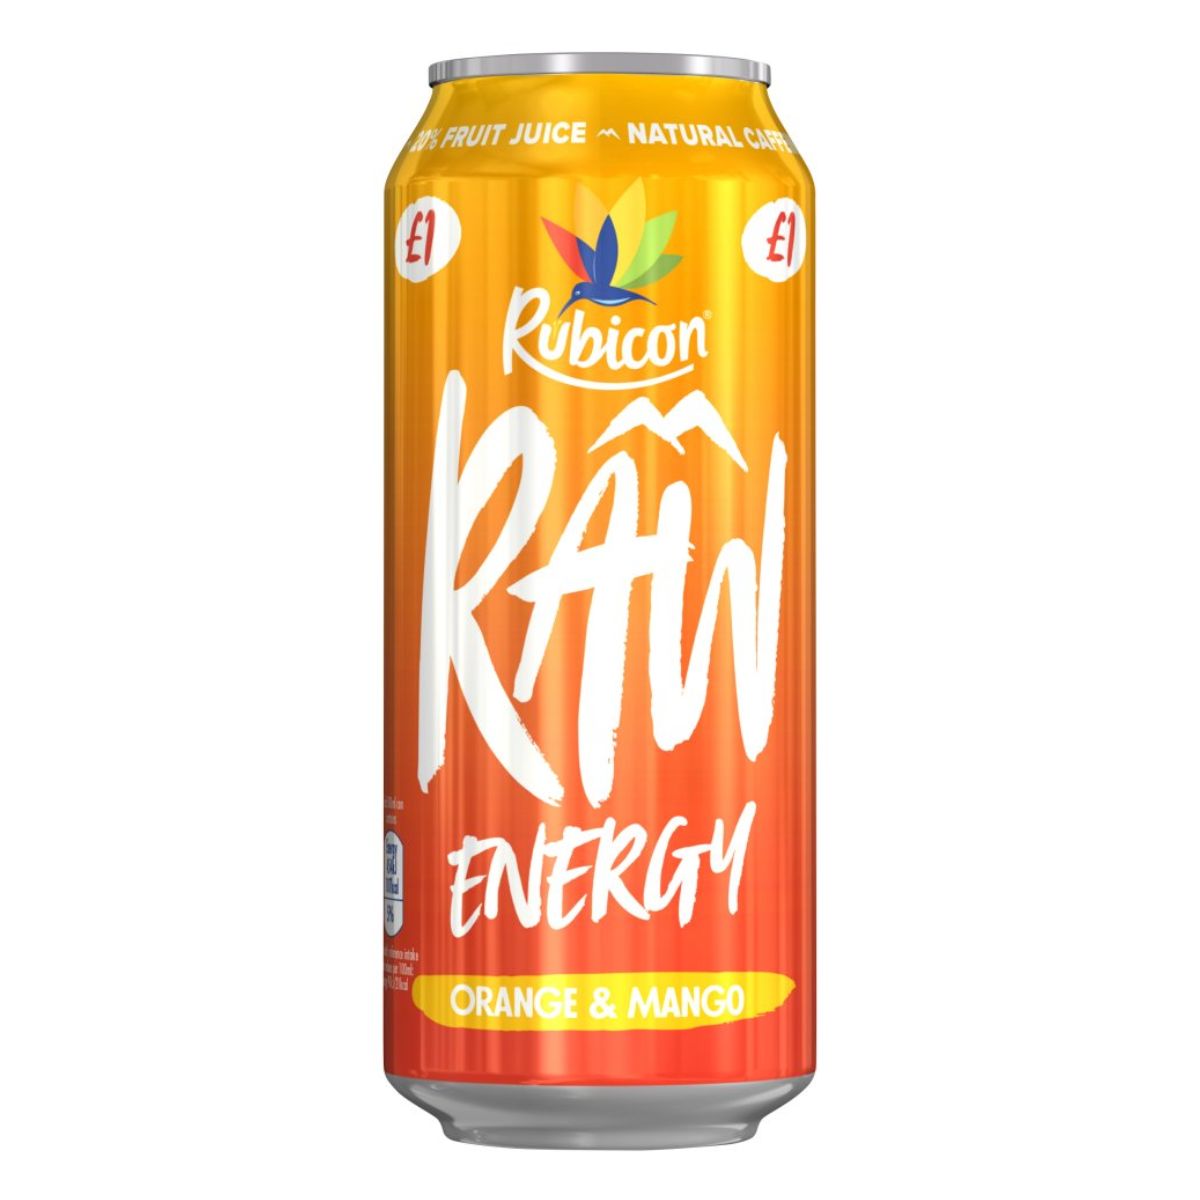 Rubicon - Raw Energy Orange & Mango - 500ml.